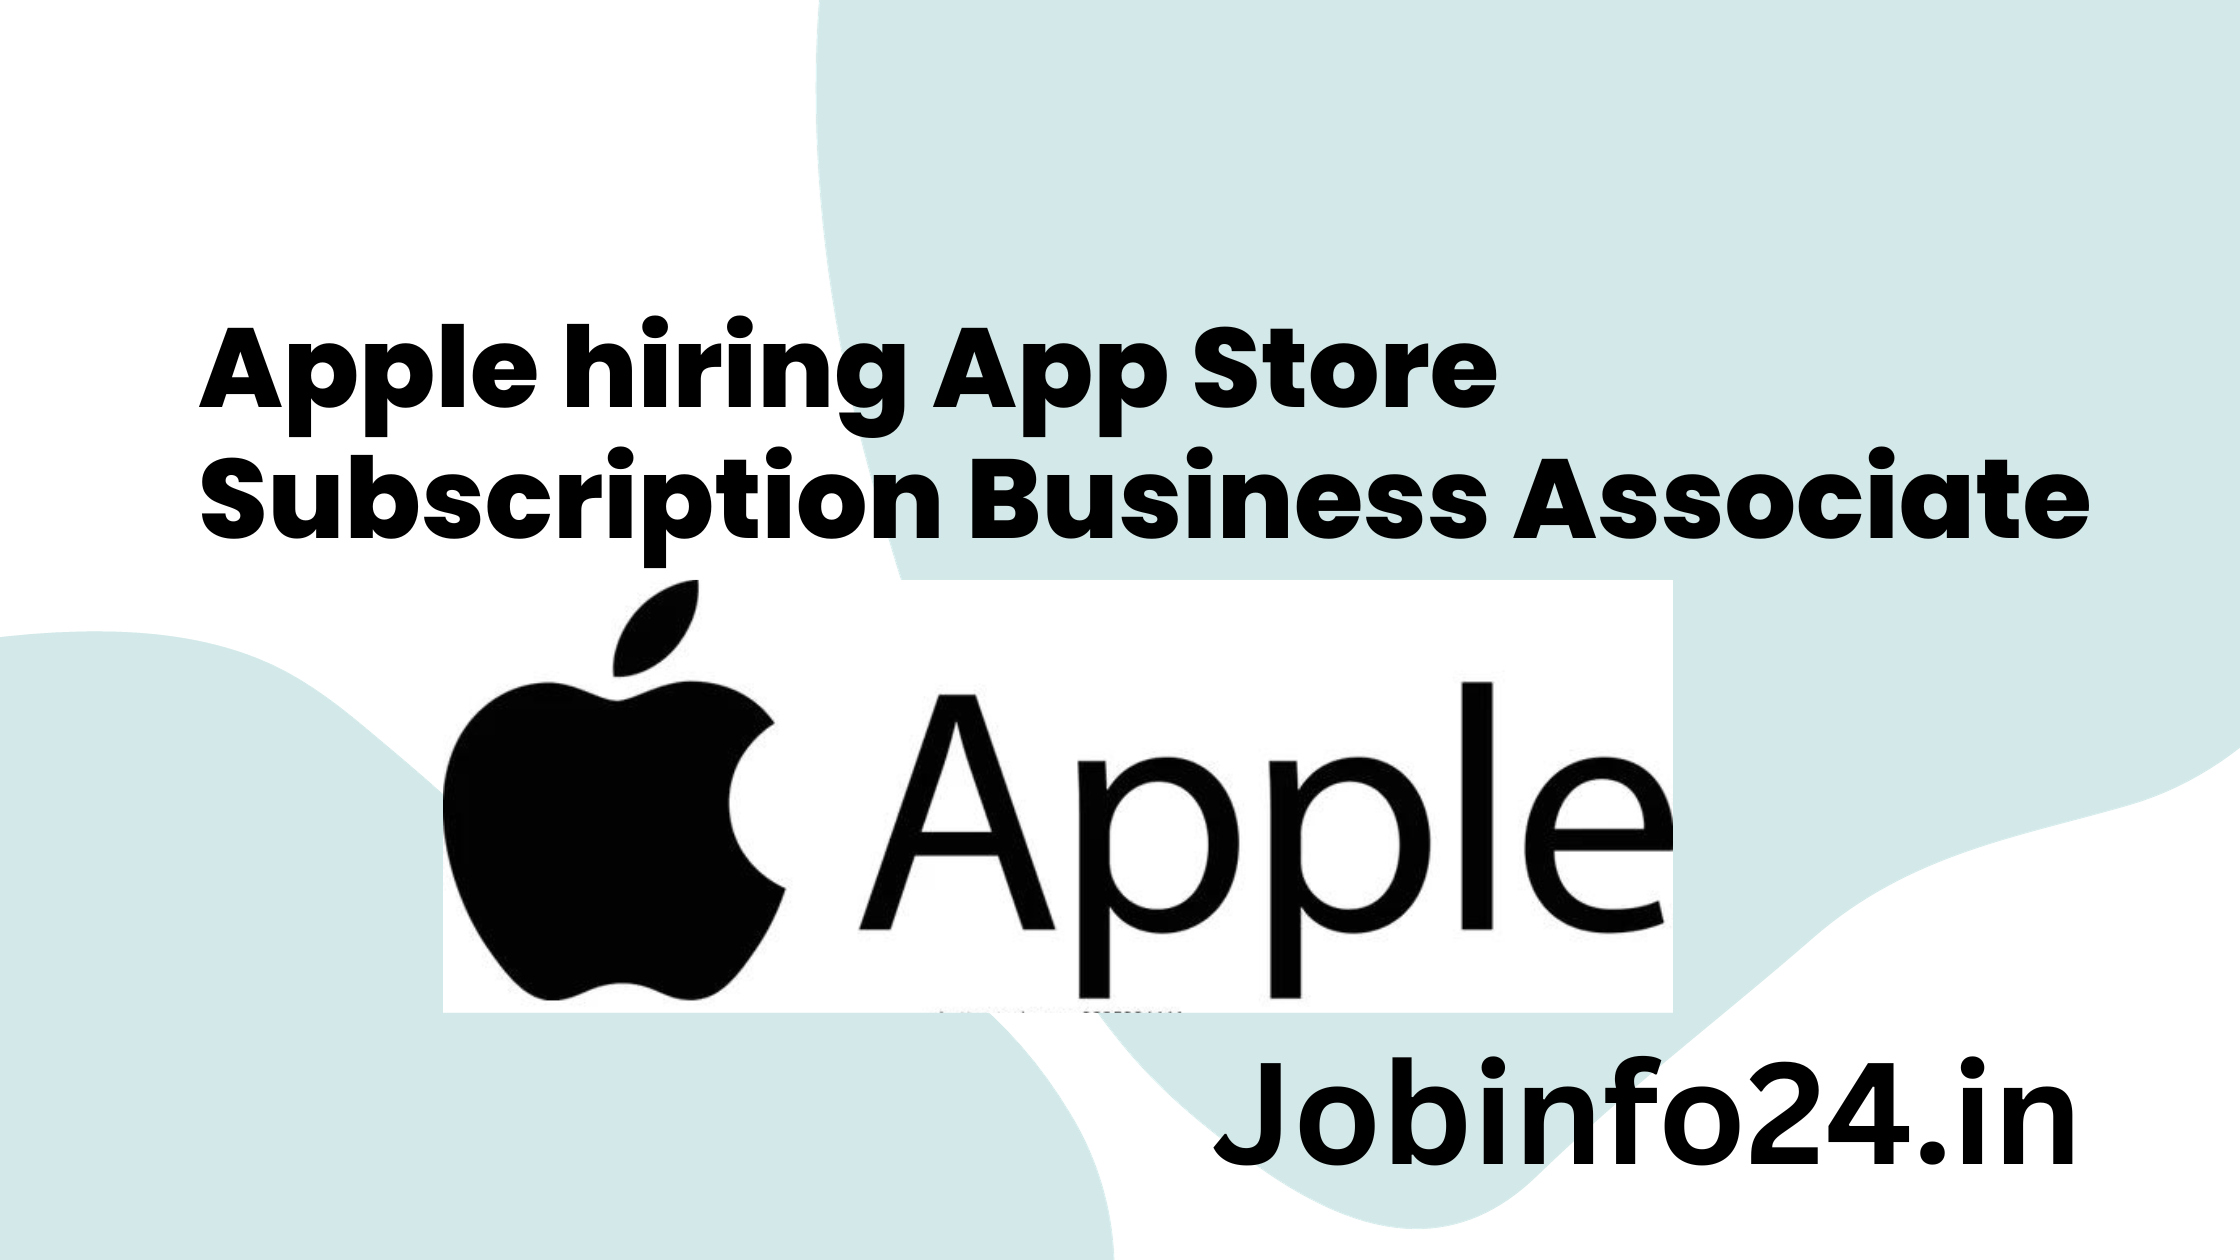 Apple hiring App Store Subscription Business Associate